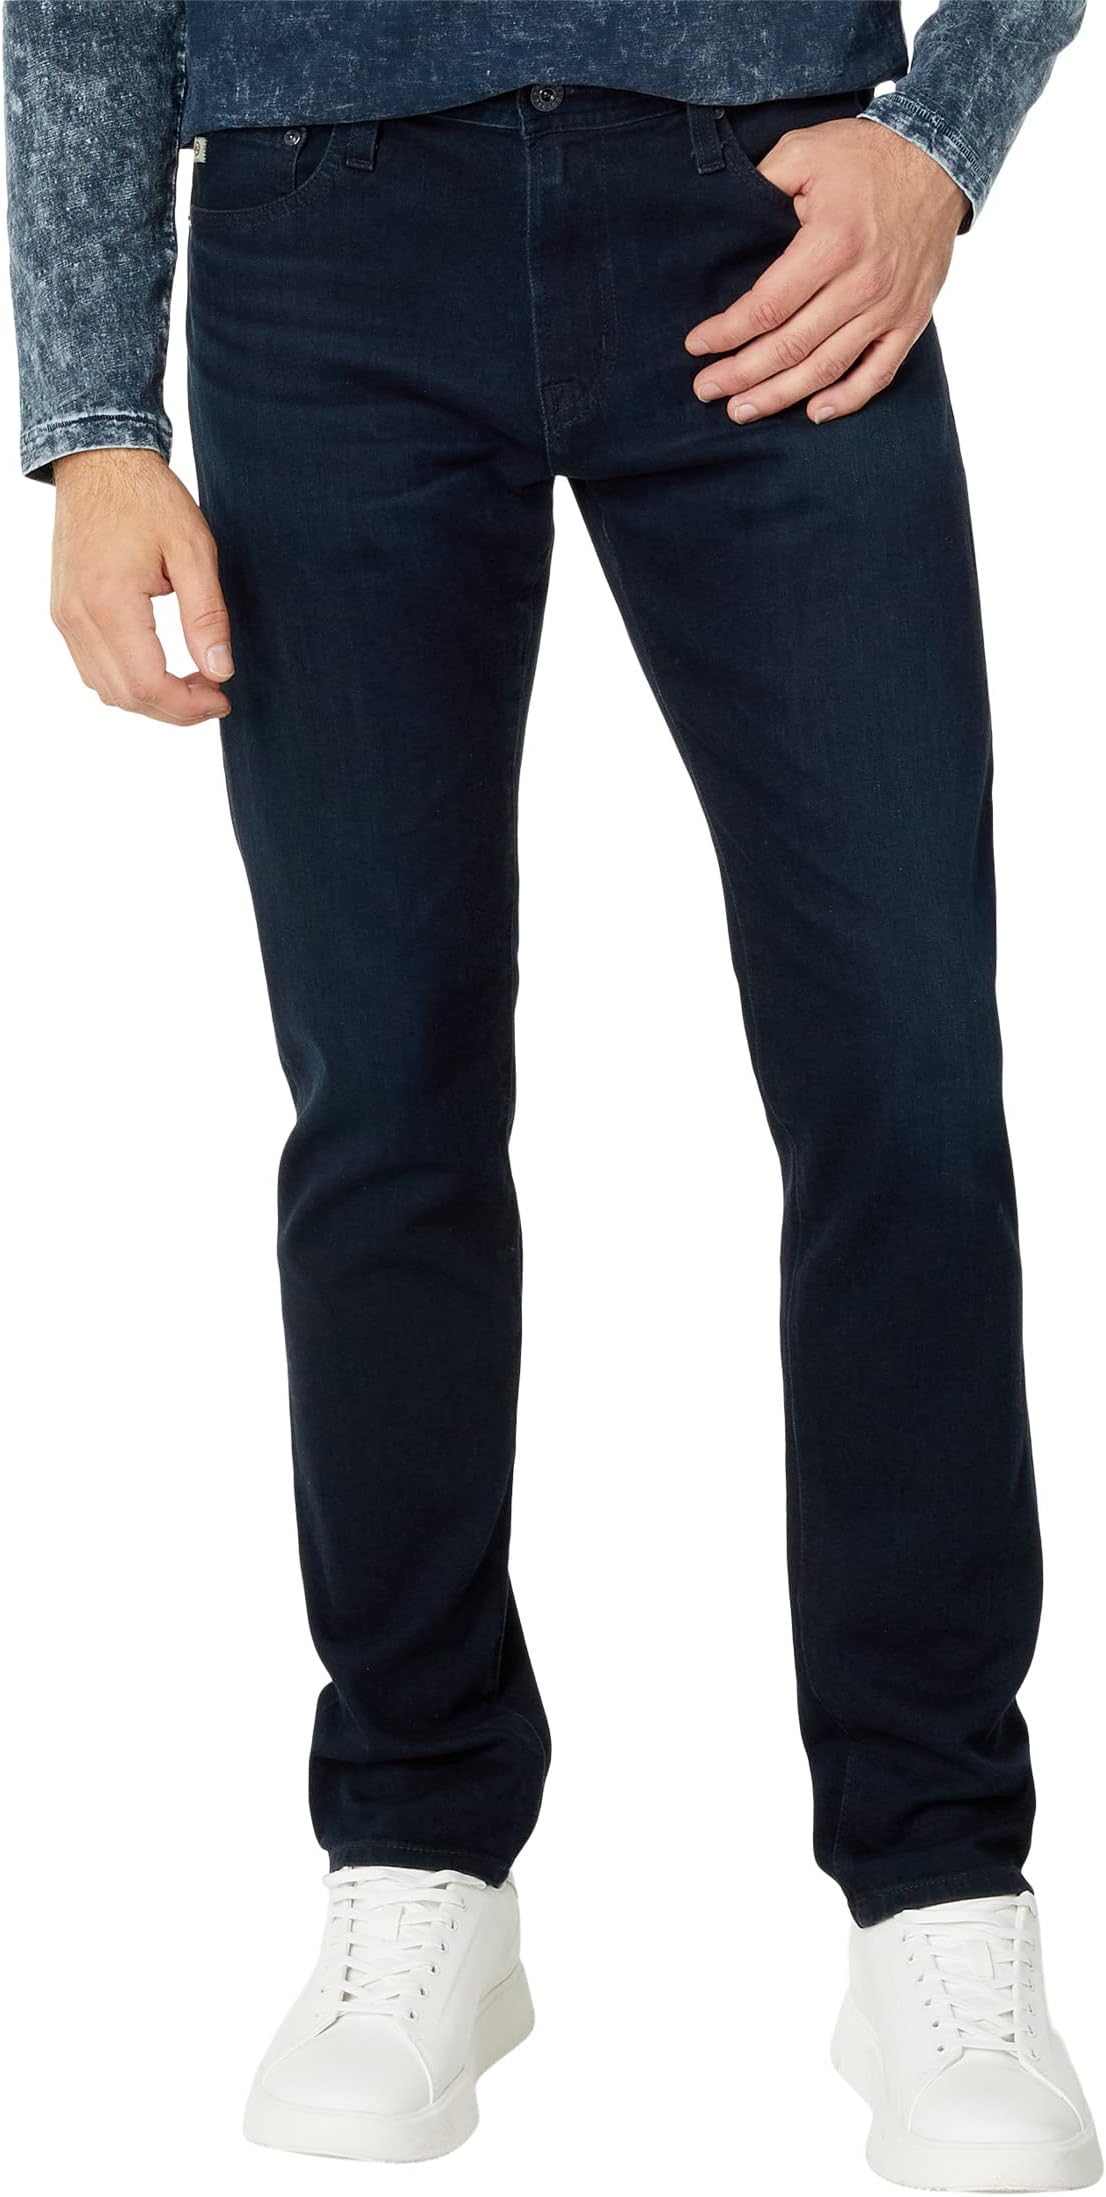 Джинсы Tellis Slim Fit Jeans in Bundled AG Jeans, цвет Bundled джинсы эластичного прямого кроя everett ag jeans цвет bundled